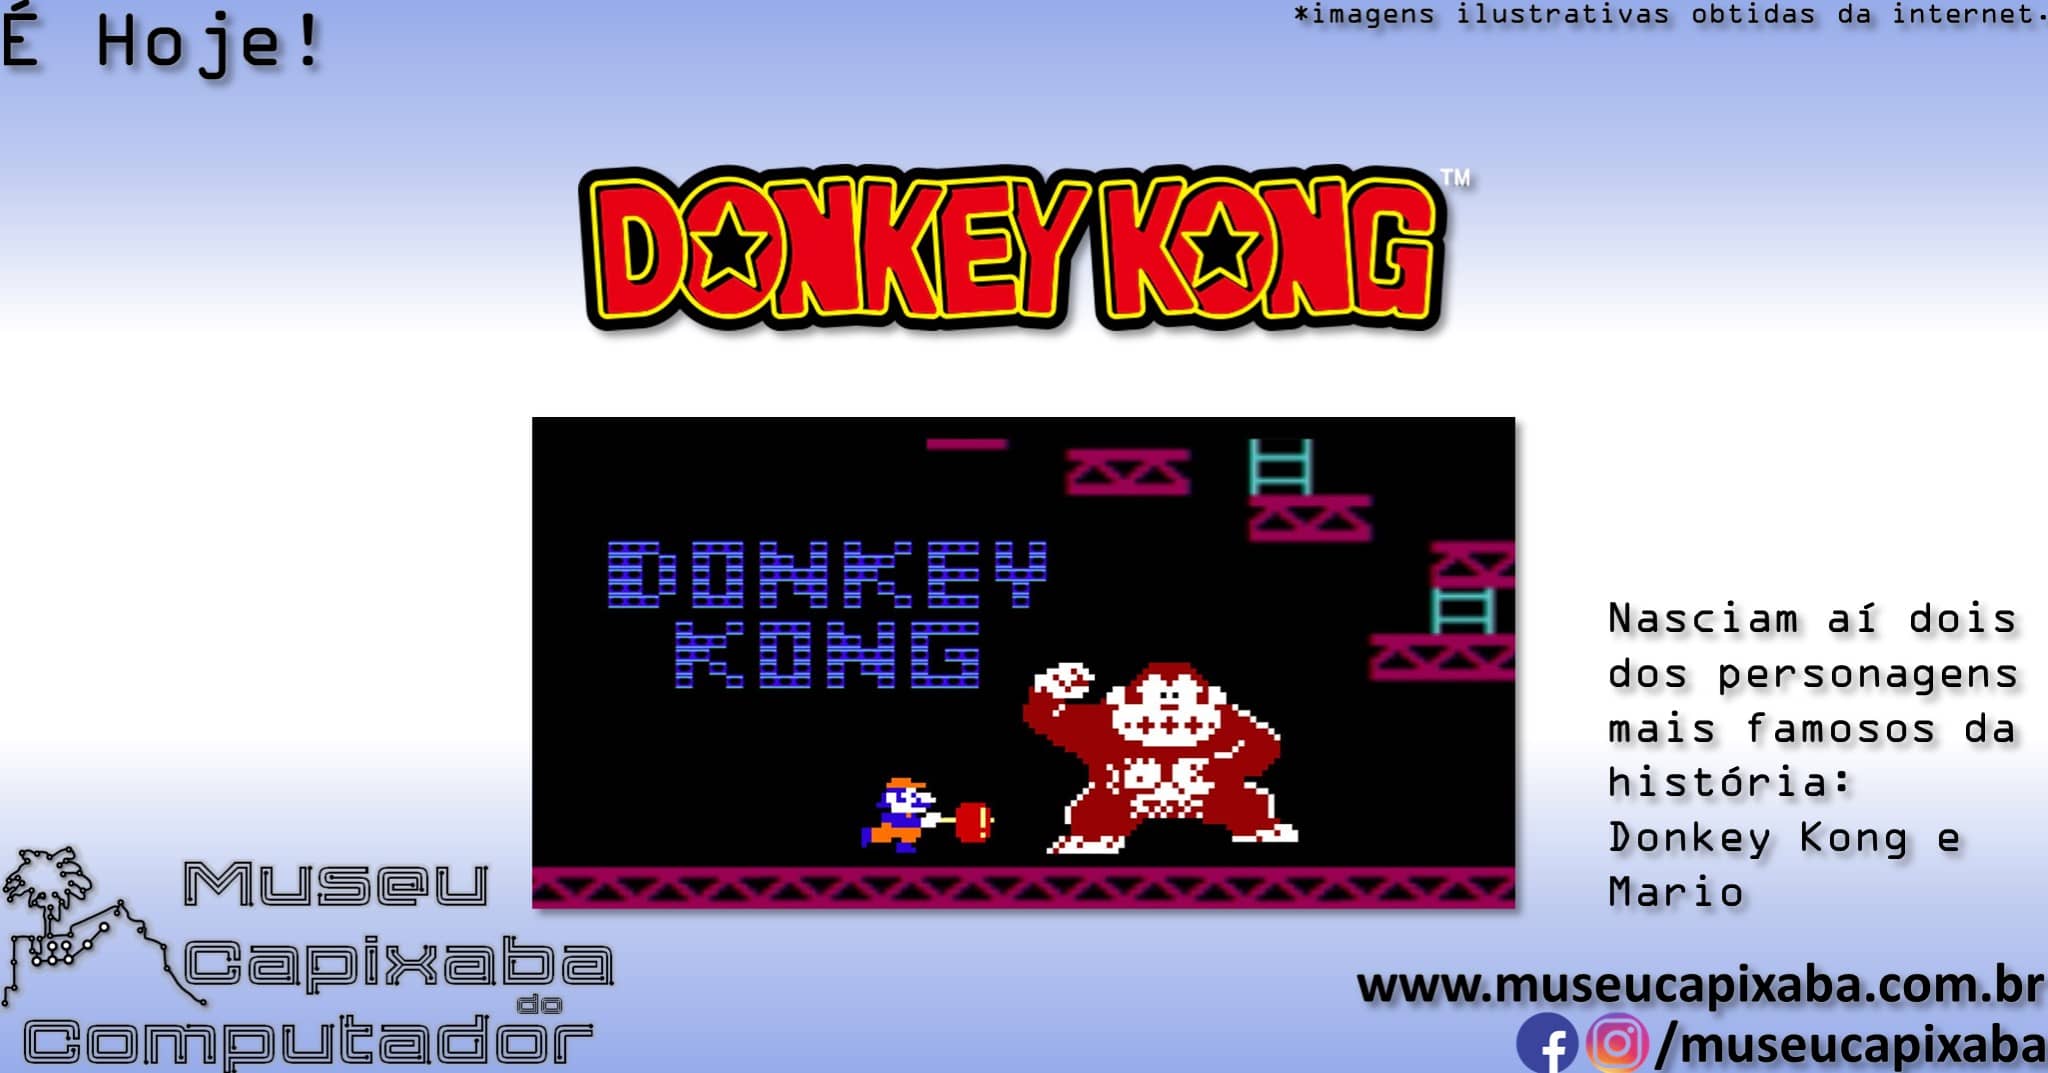 Nintendo Donkey Kong 1